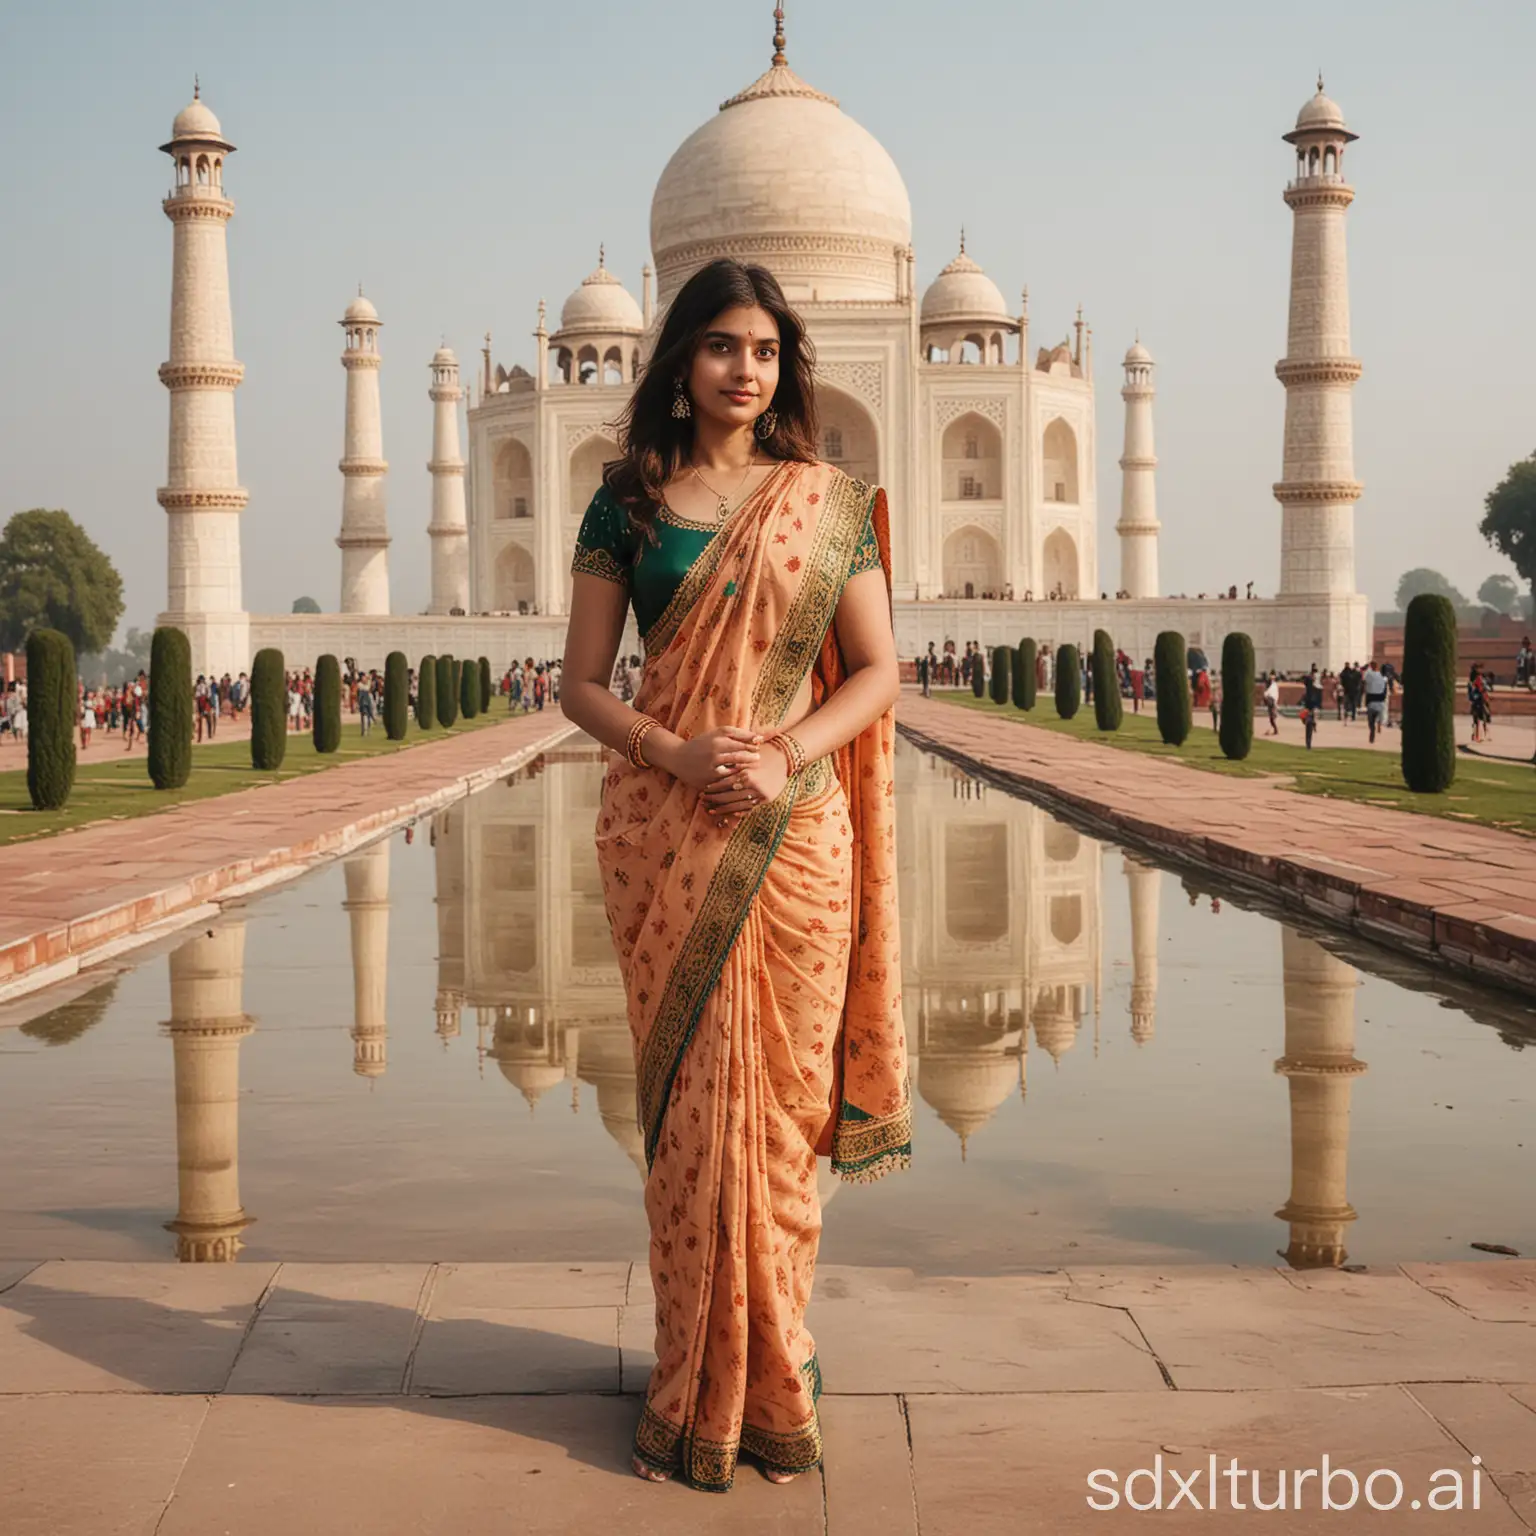 Traditional-Indian-Girls-Admiring-Taj-Mahal-at-Sunrise